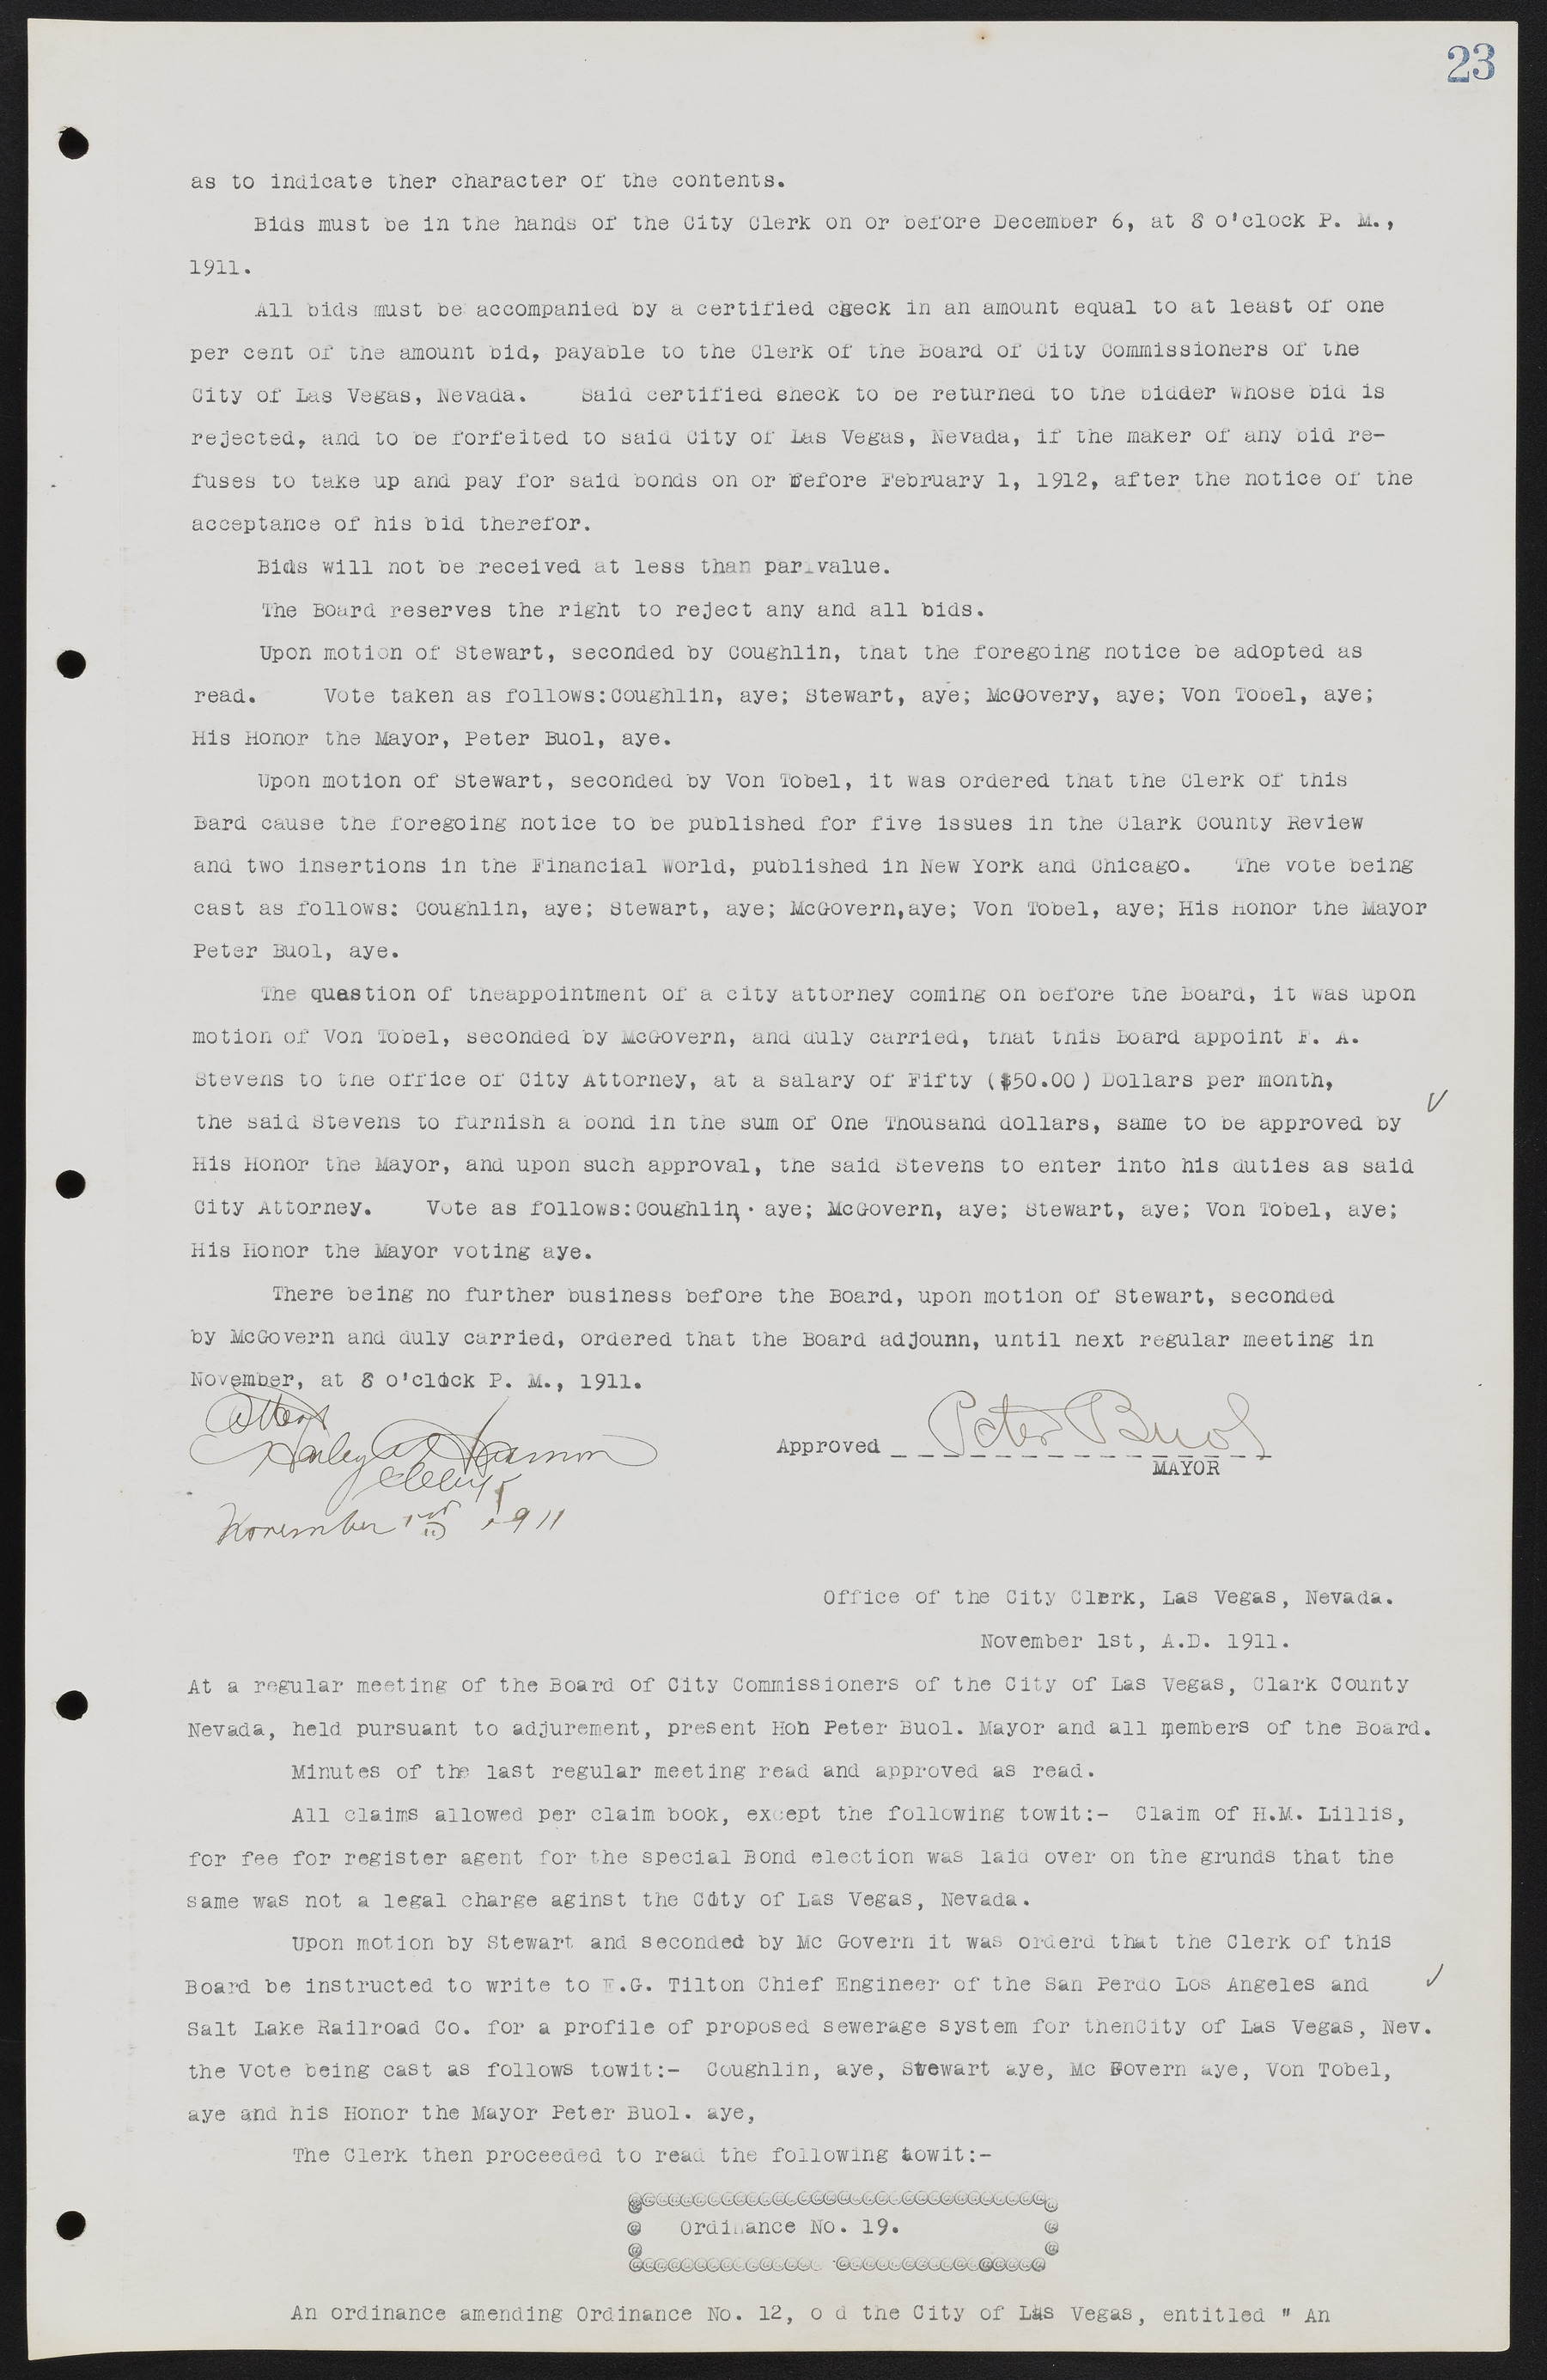 Las Vegas City Commission Minutes, June 22, 1911 to February 7, 1922, lvc000001-37